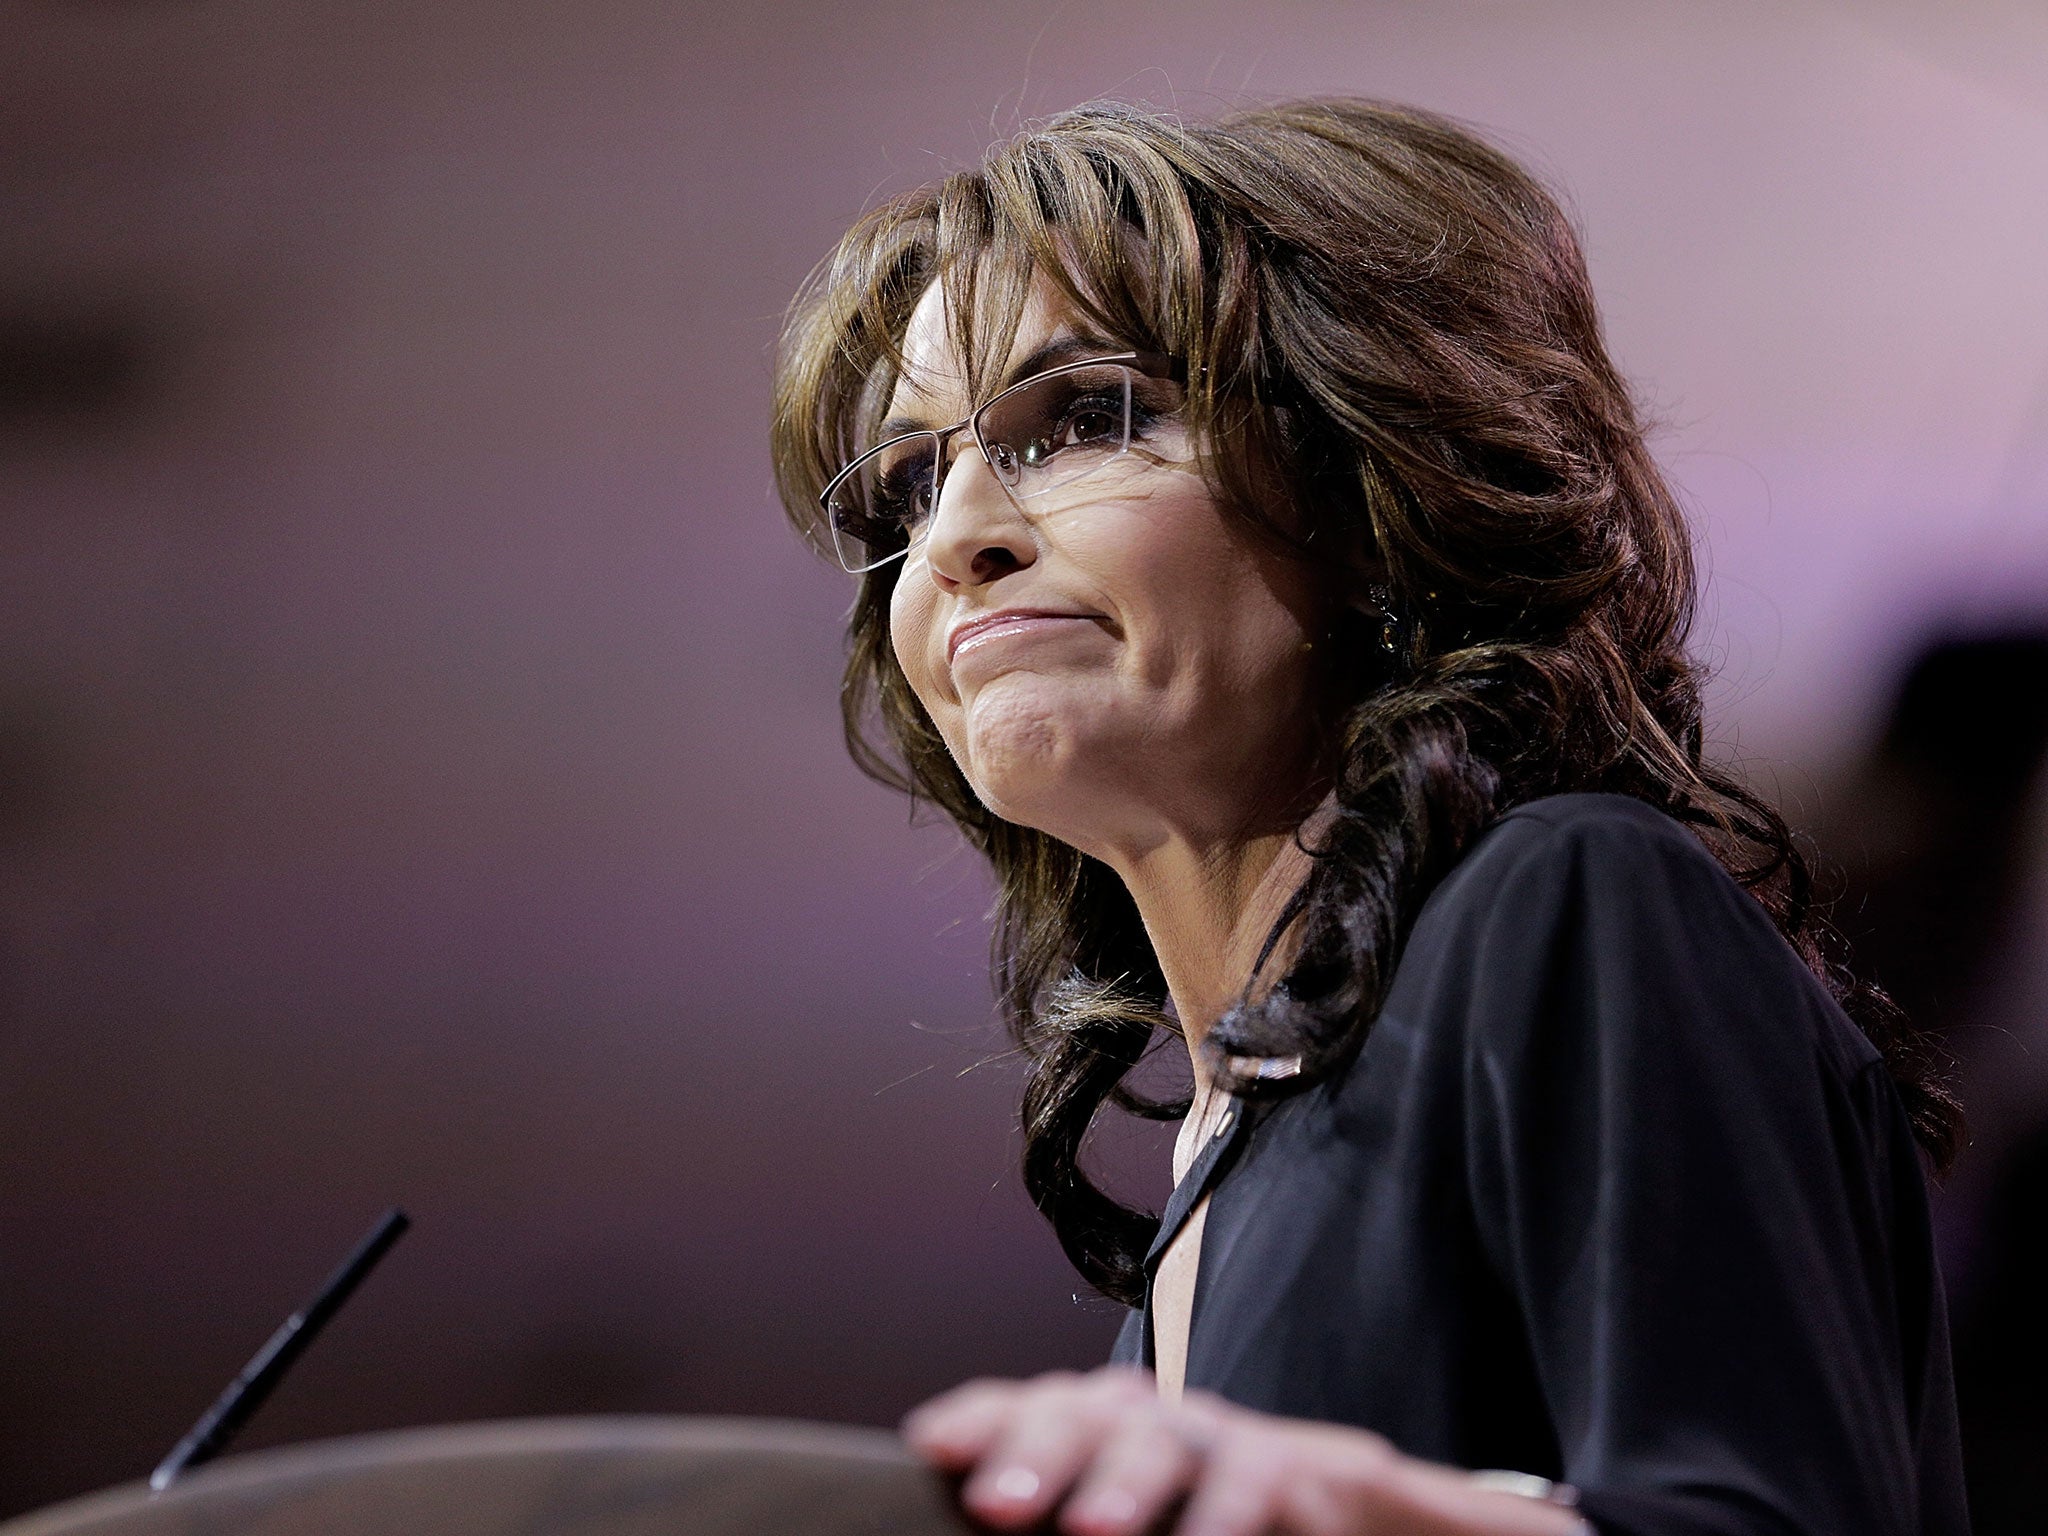 Sarah Palin has not had her contract with Fox renewed